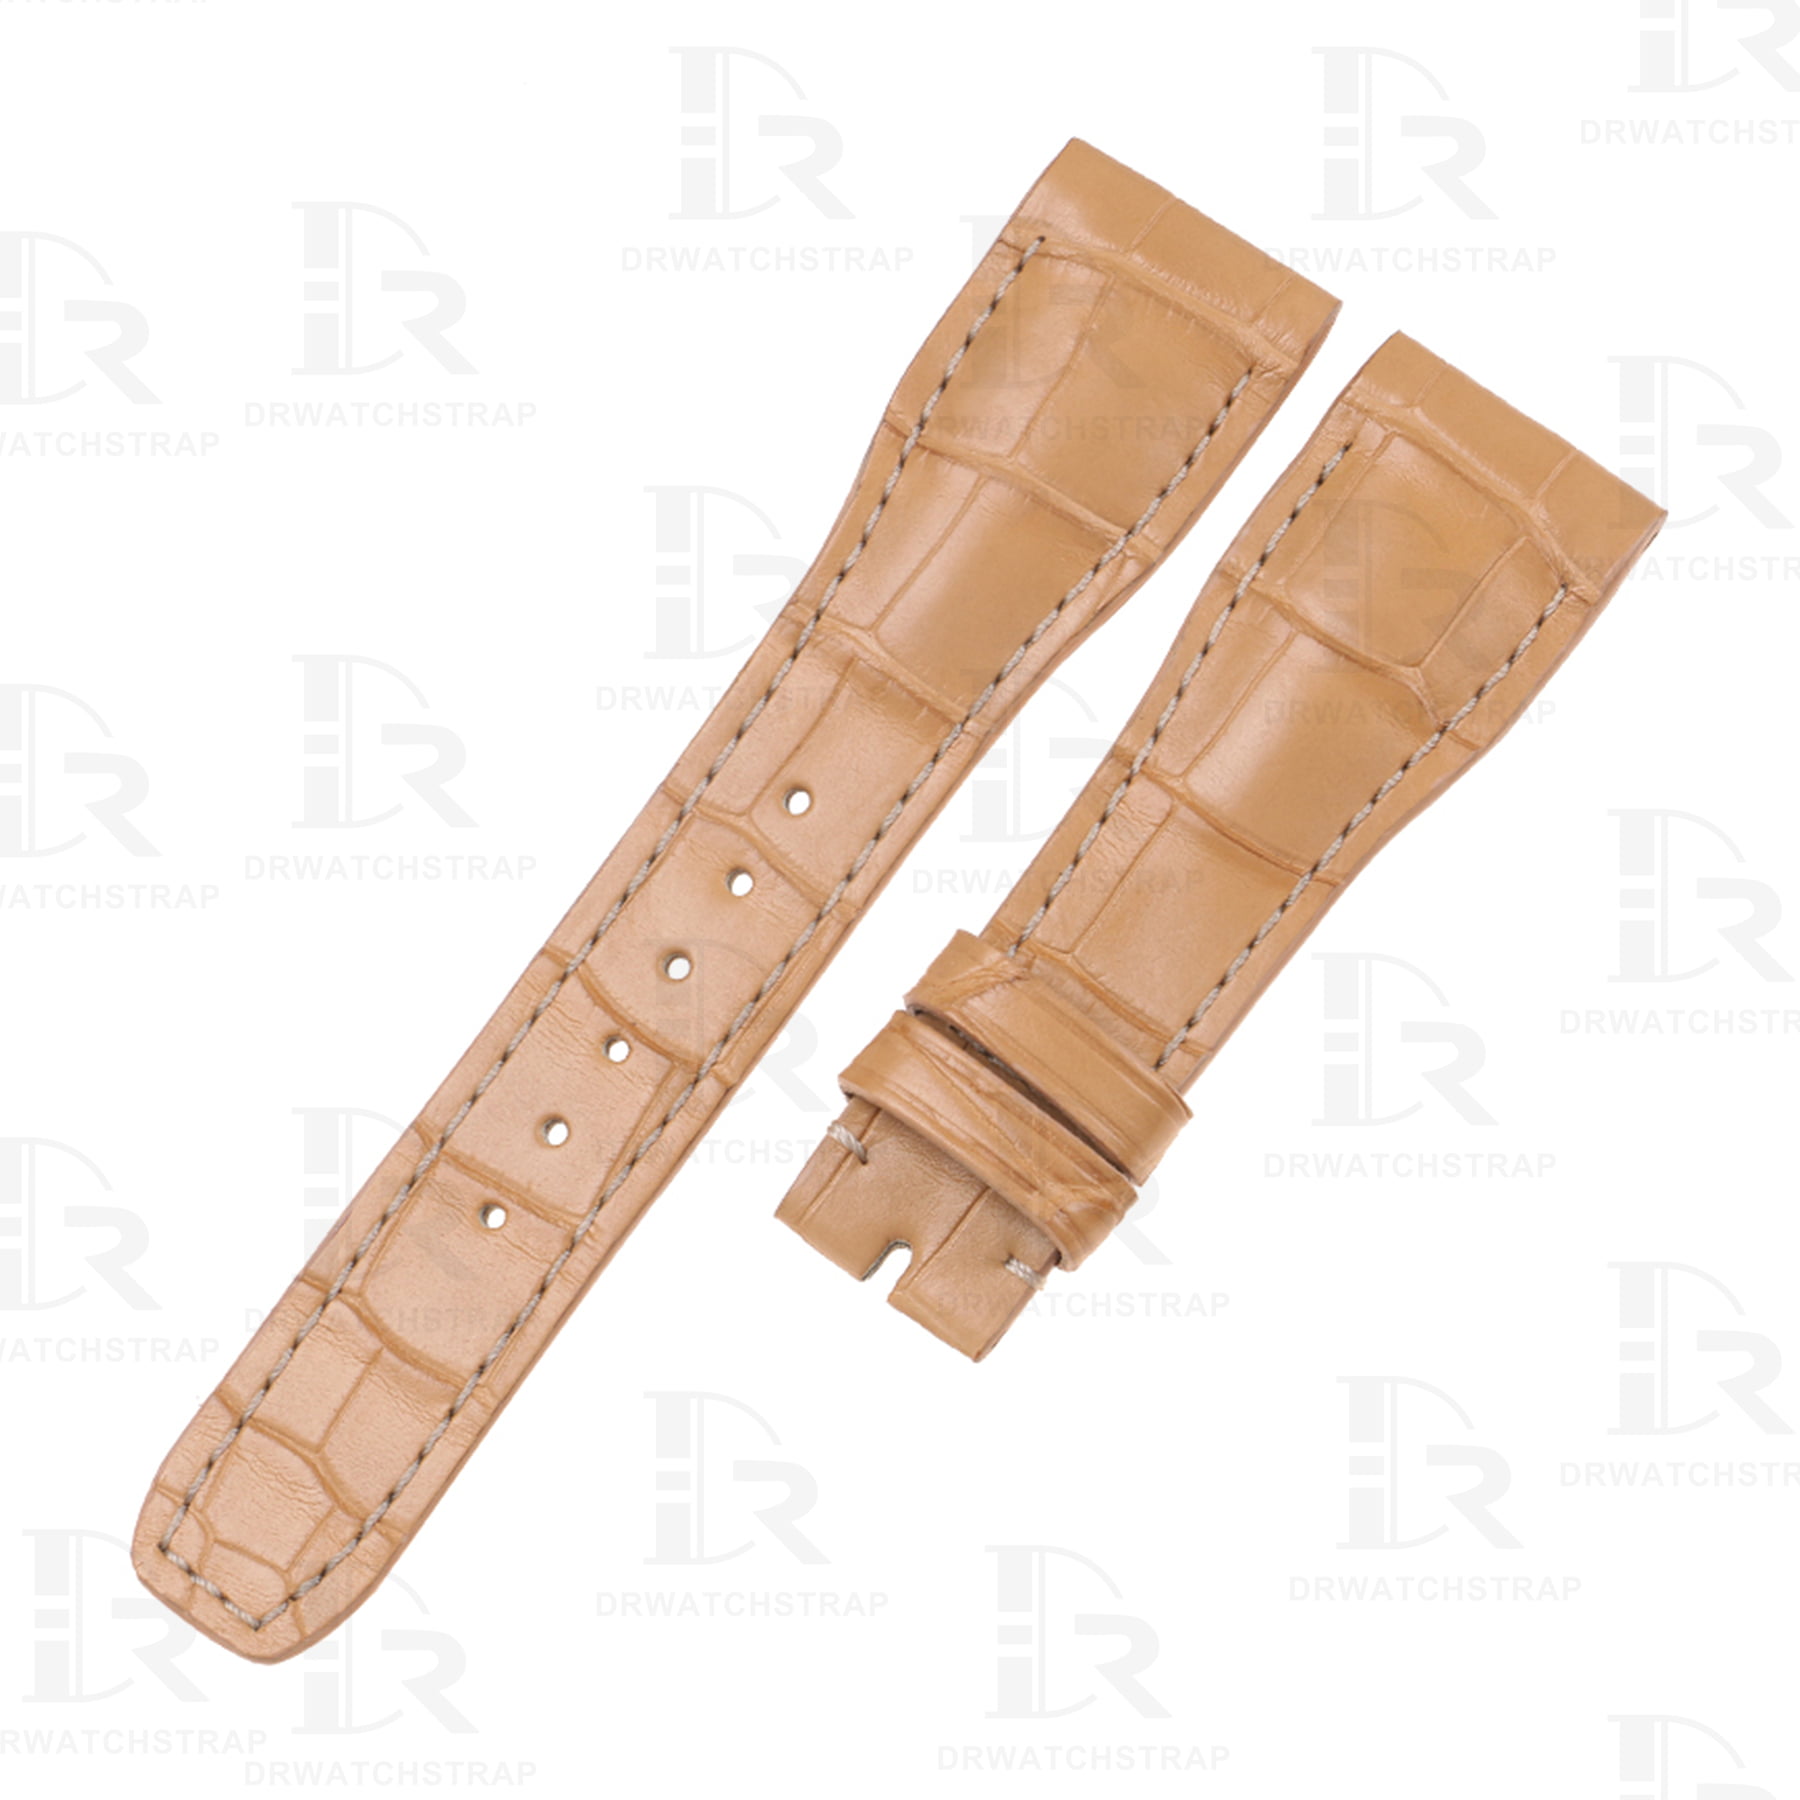 Buy custom Baume et Mercier Hambleton Creighton Clays Khaki leather straps 20mm 22mm 26mm 28mm 32mm handmade for watch strap